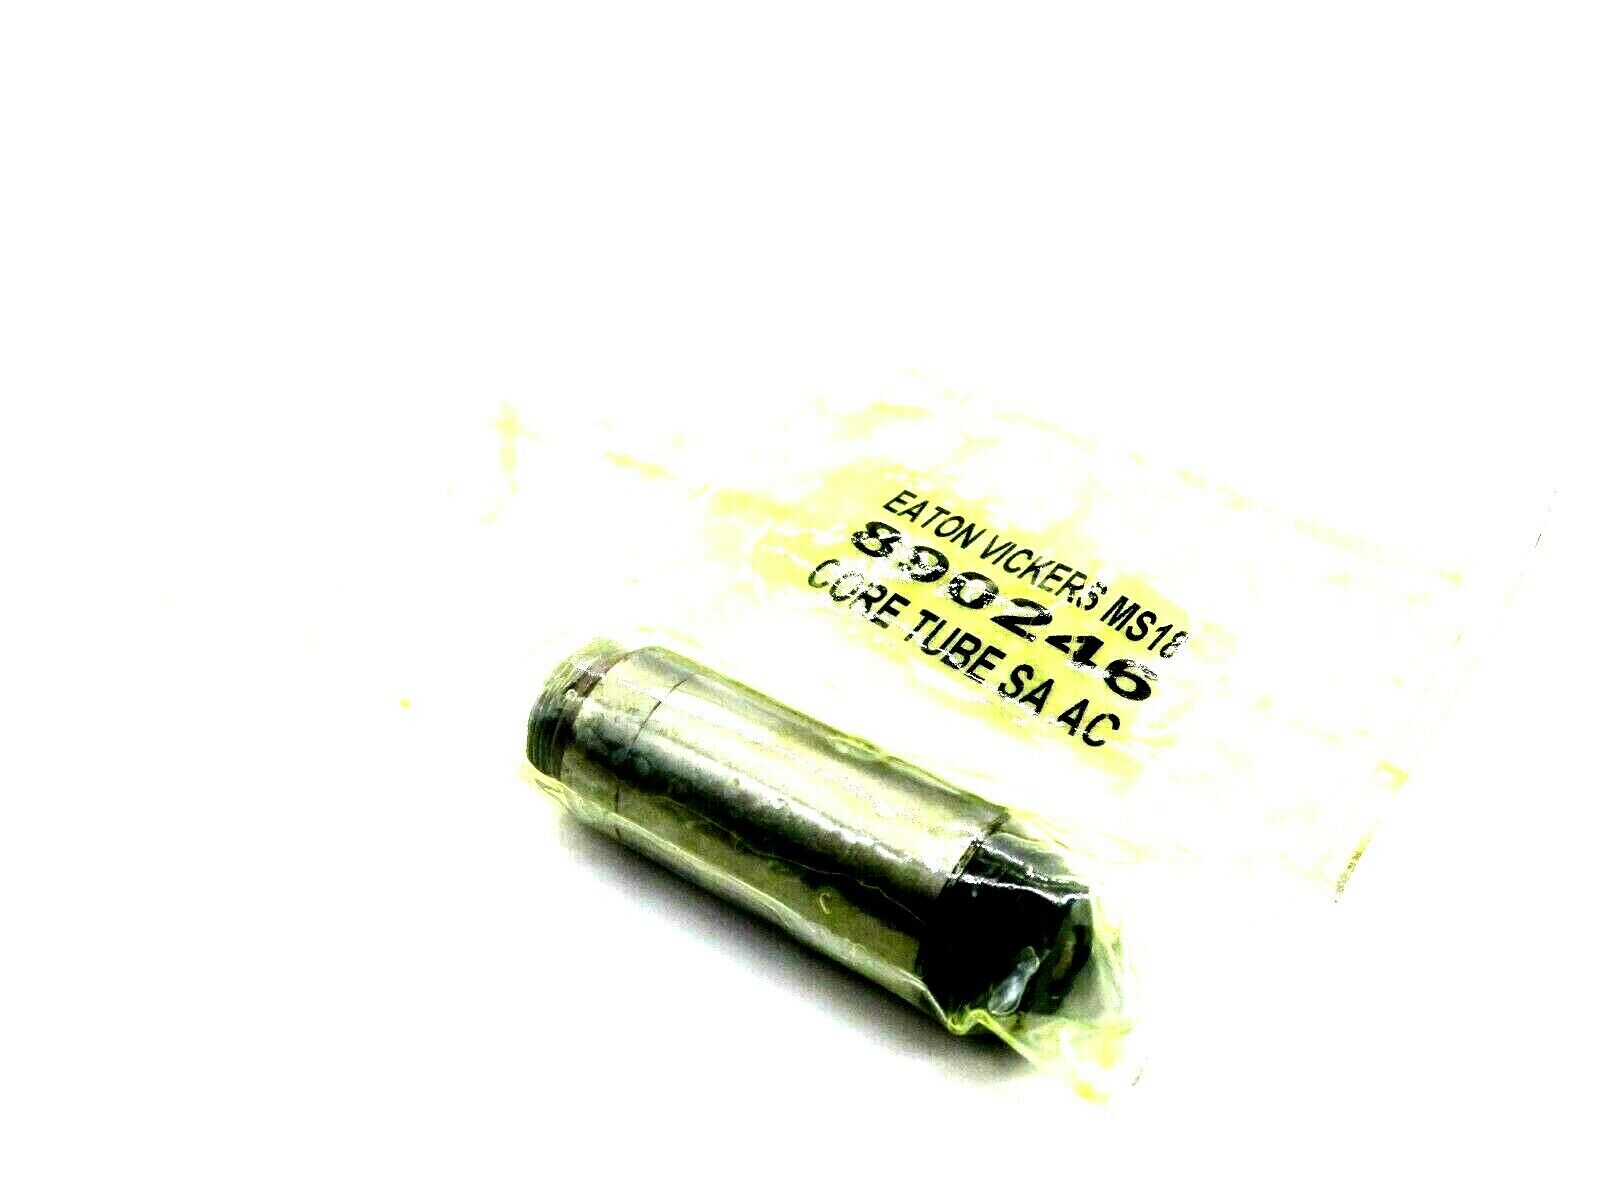 Vickers part #890246 core tube 